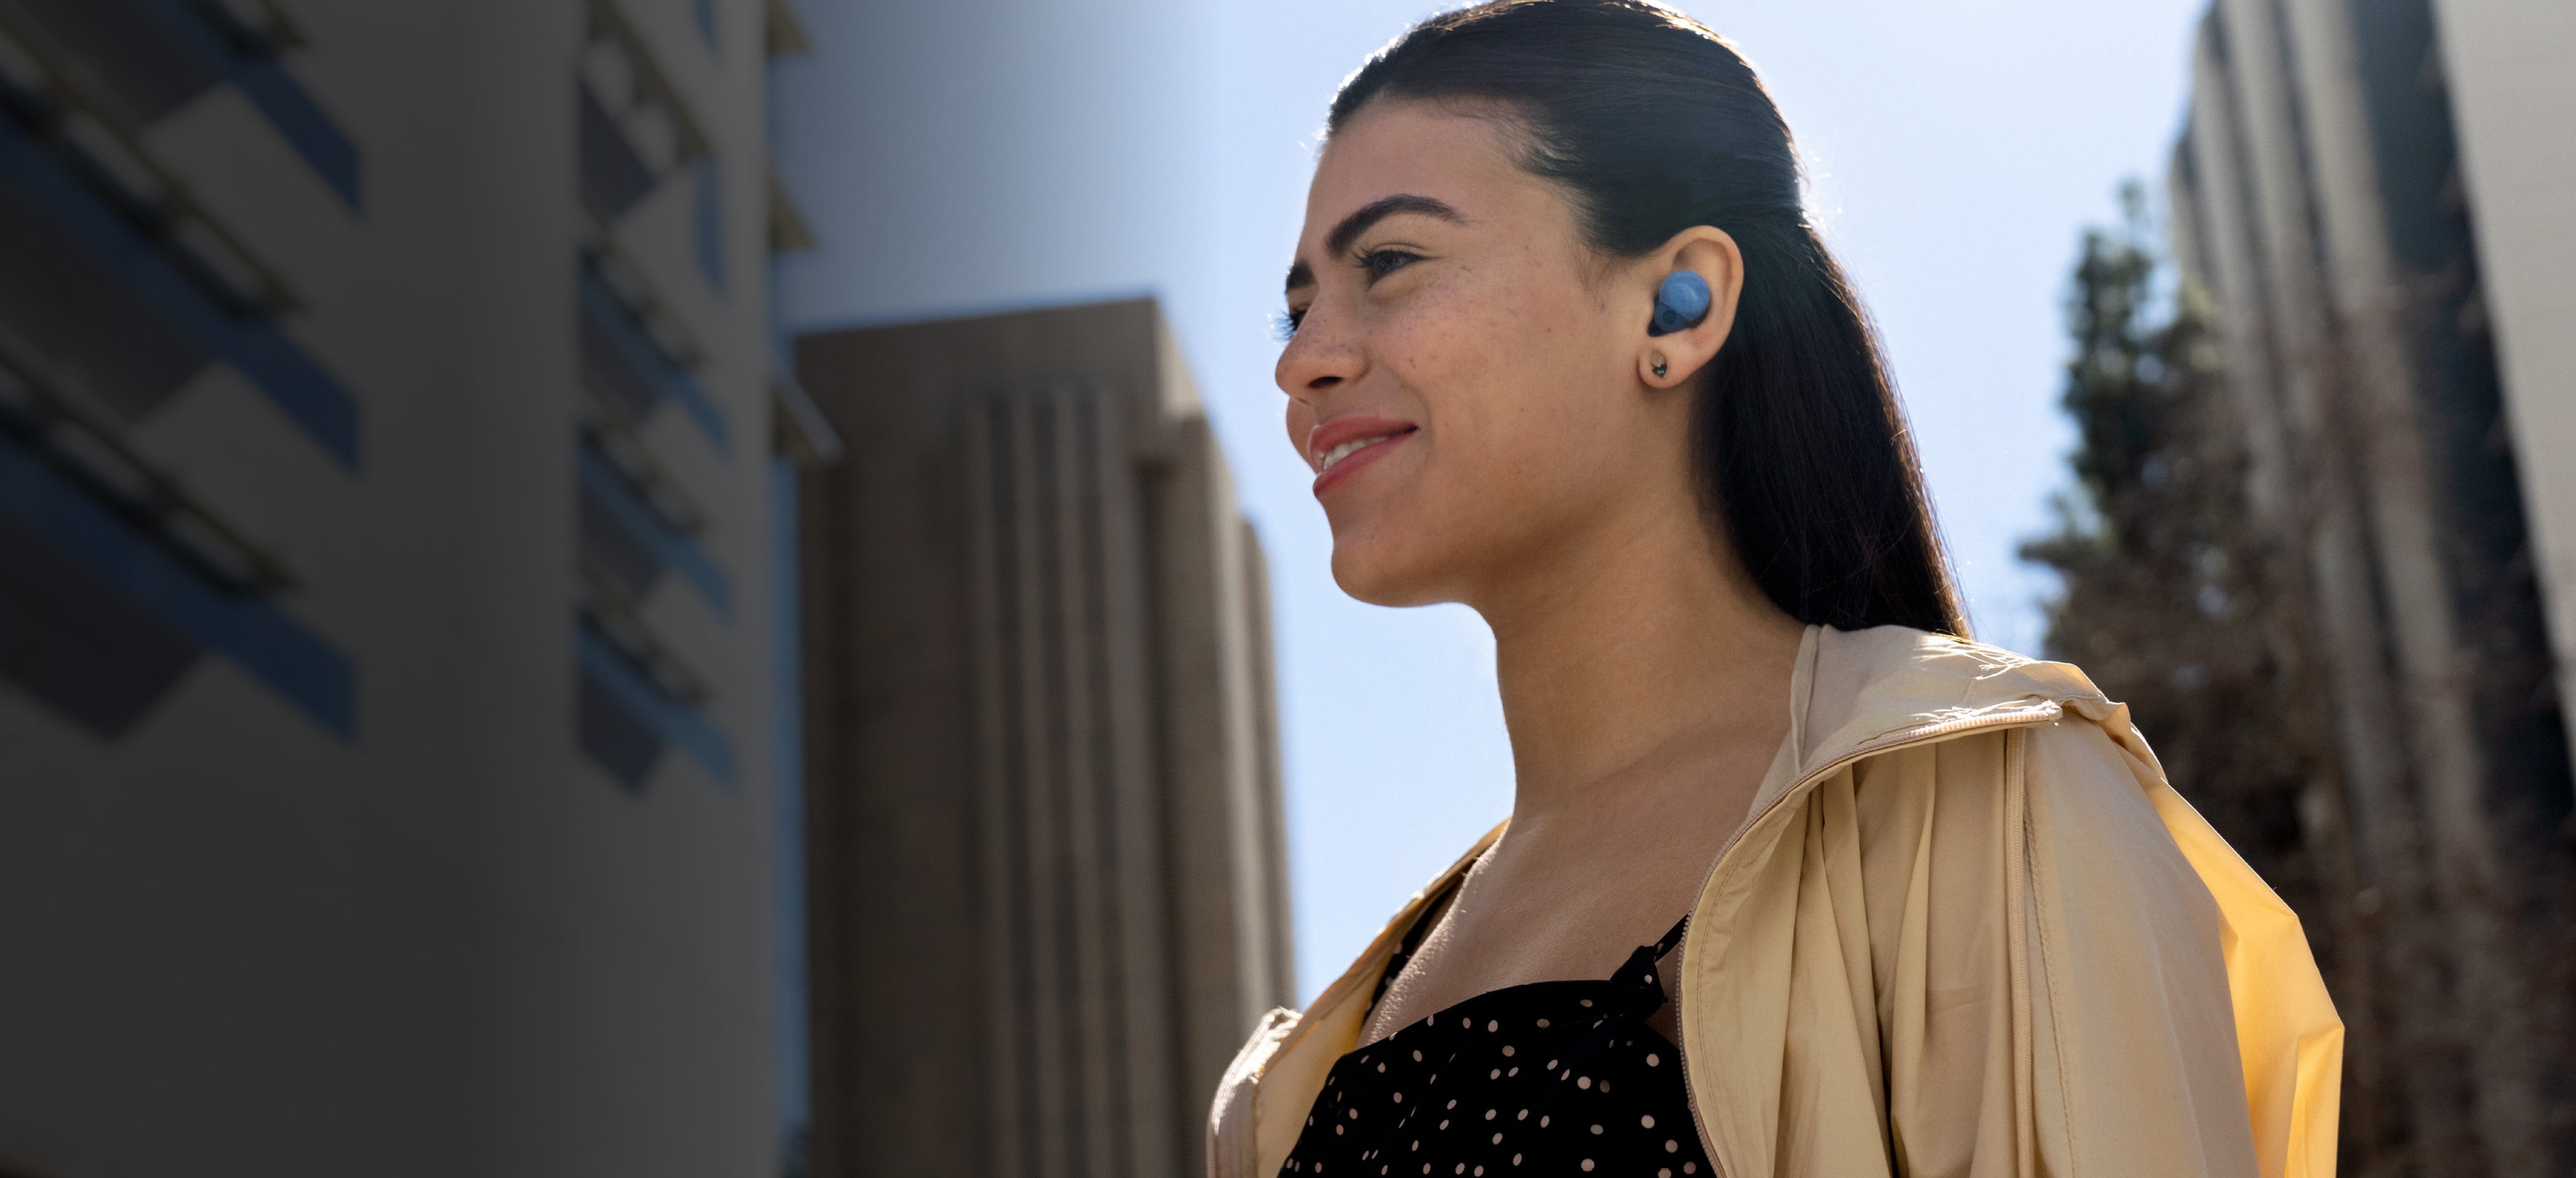 Sony LinkBuds S Truly Wireless Noise Canceling Earbud Headphones